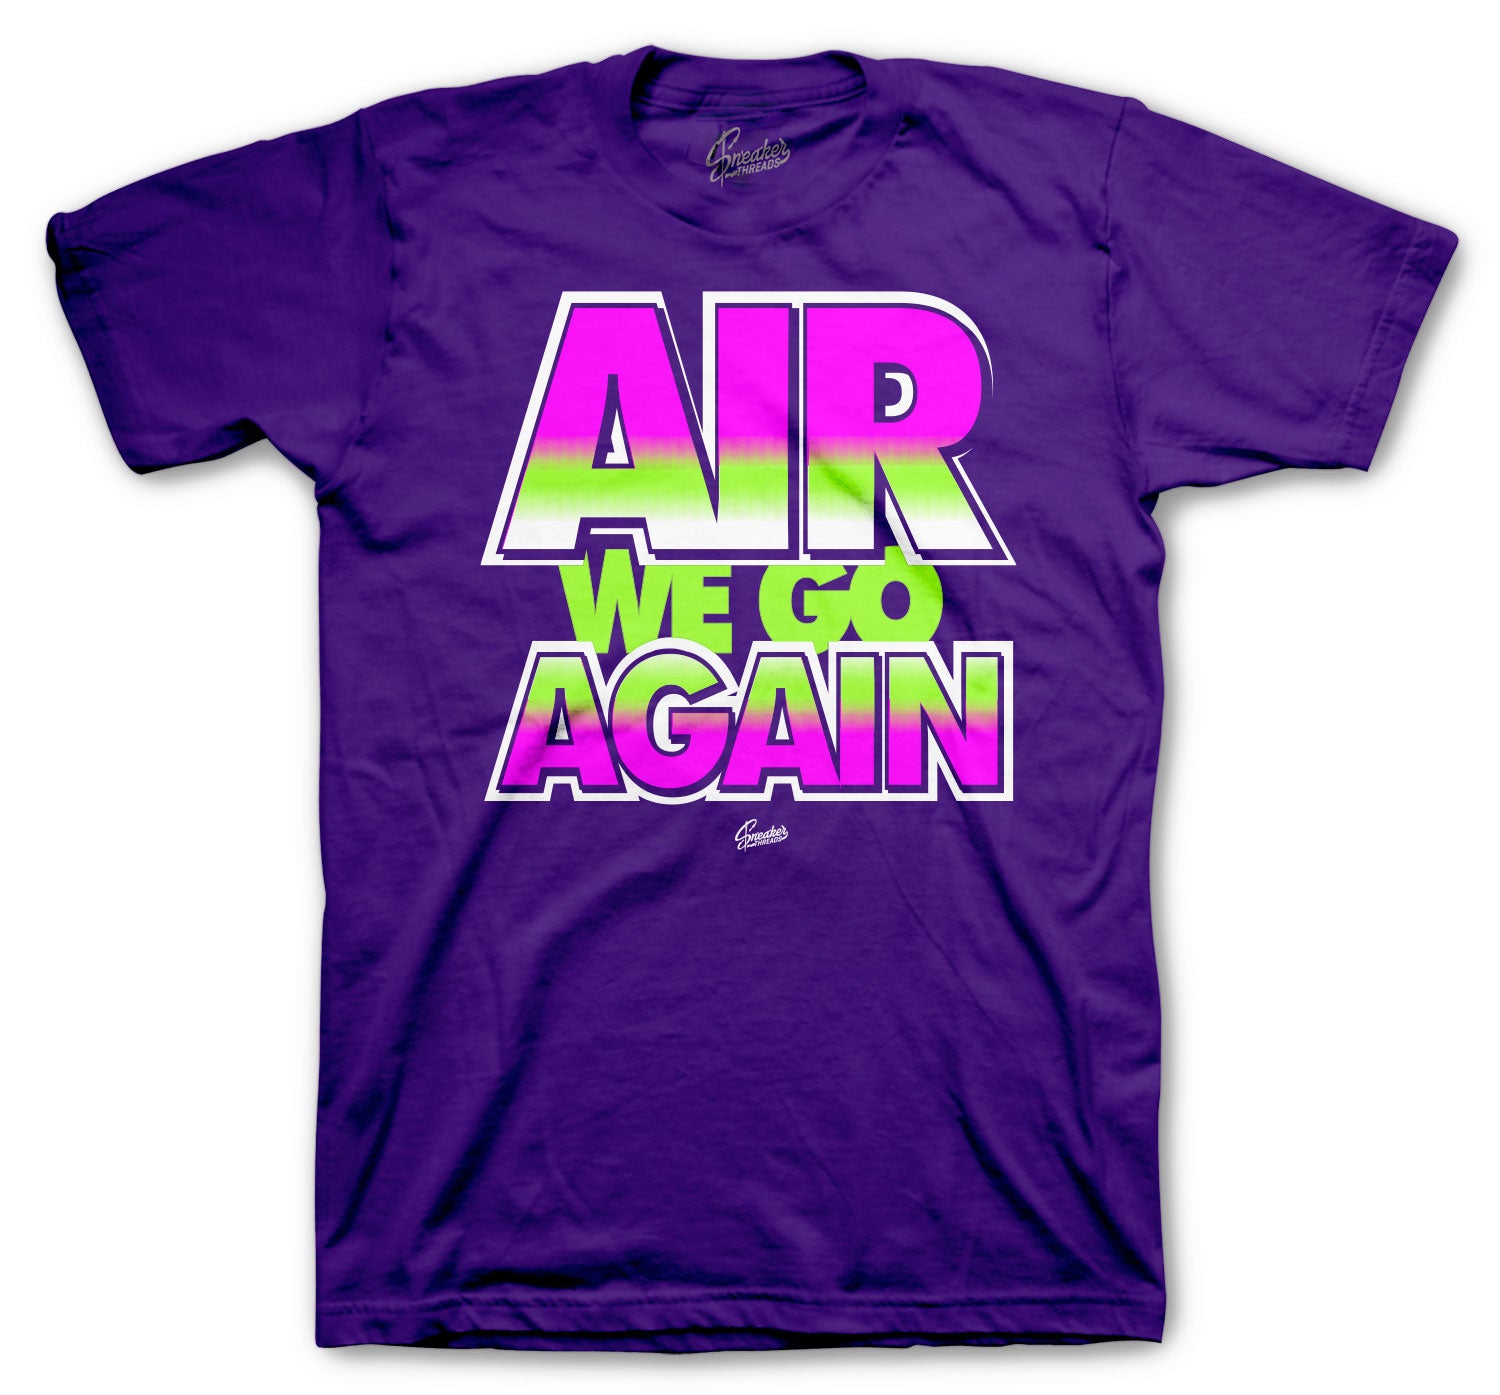 Jordan 5 alternate bel air sneaker collection matching with t shirts